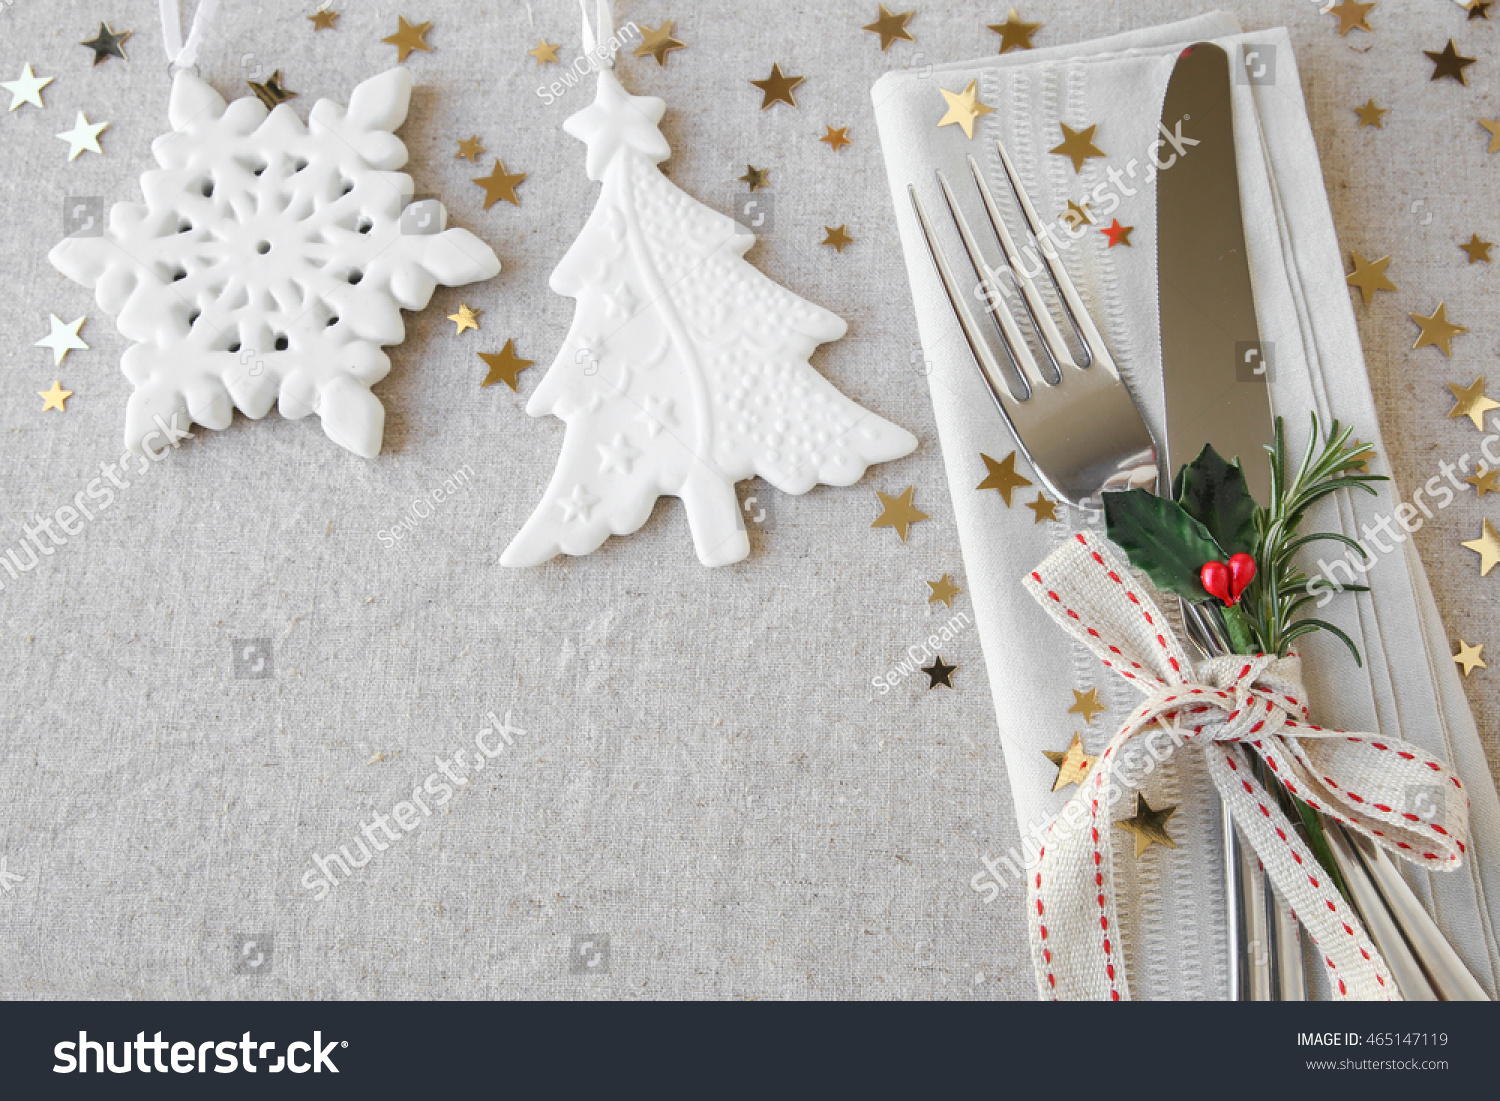 New Year Eve 2018 Christmas Food Stock Photo 465147119 